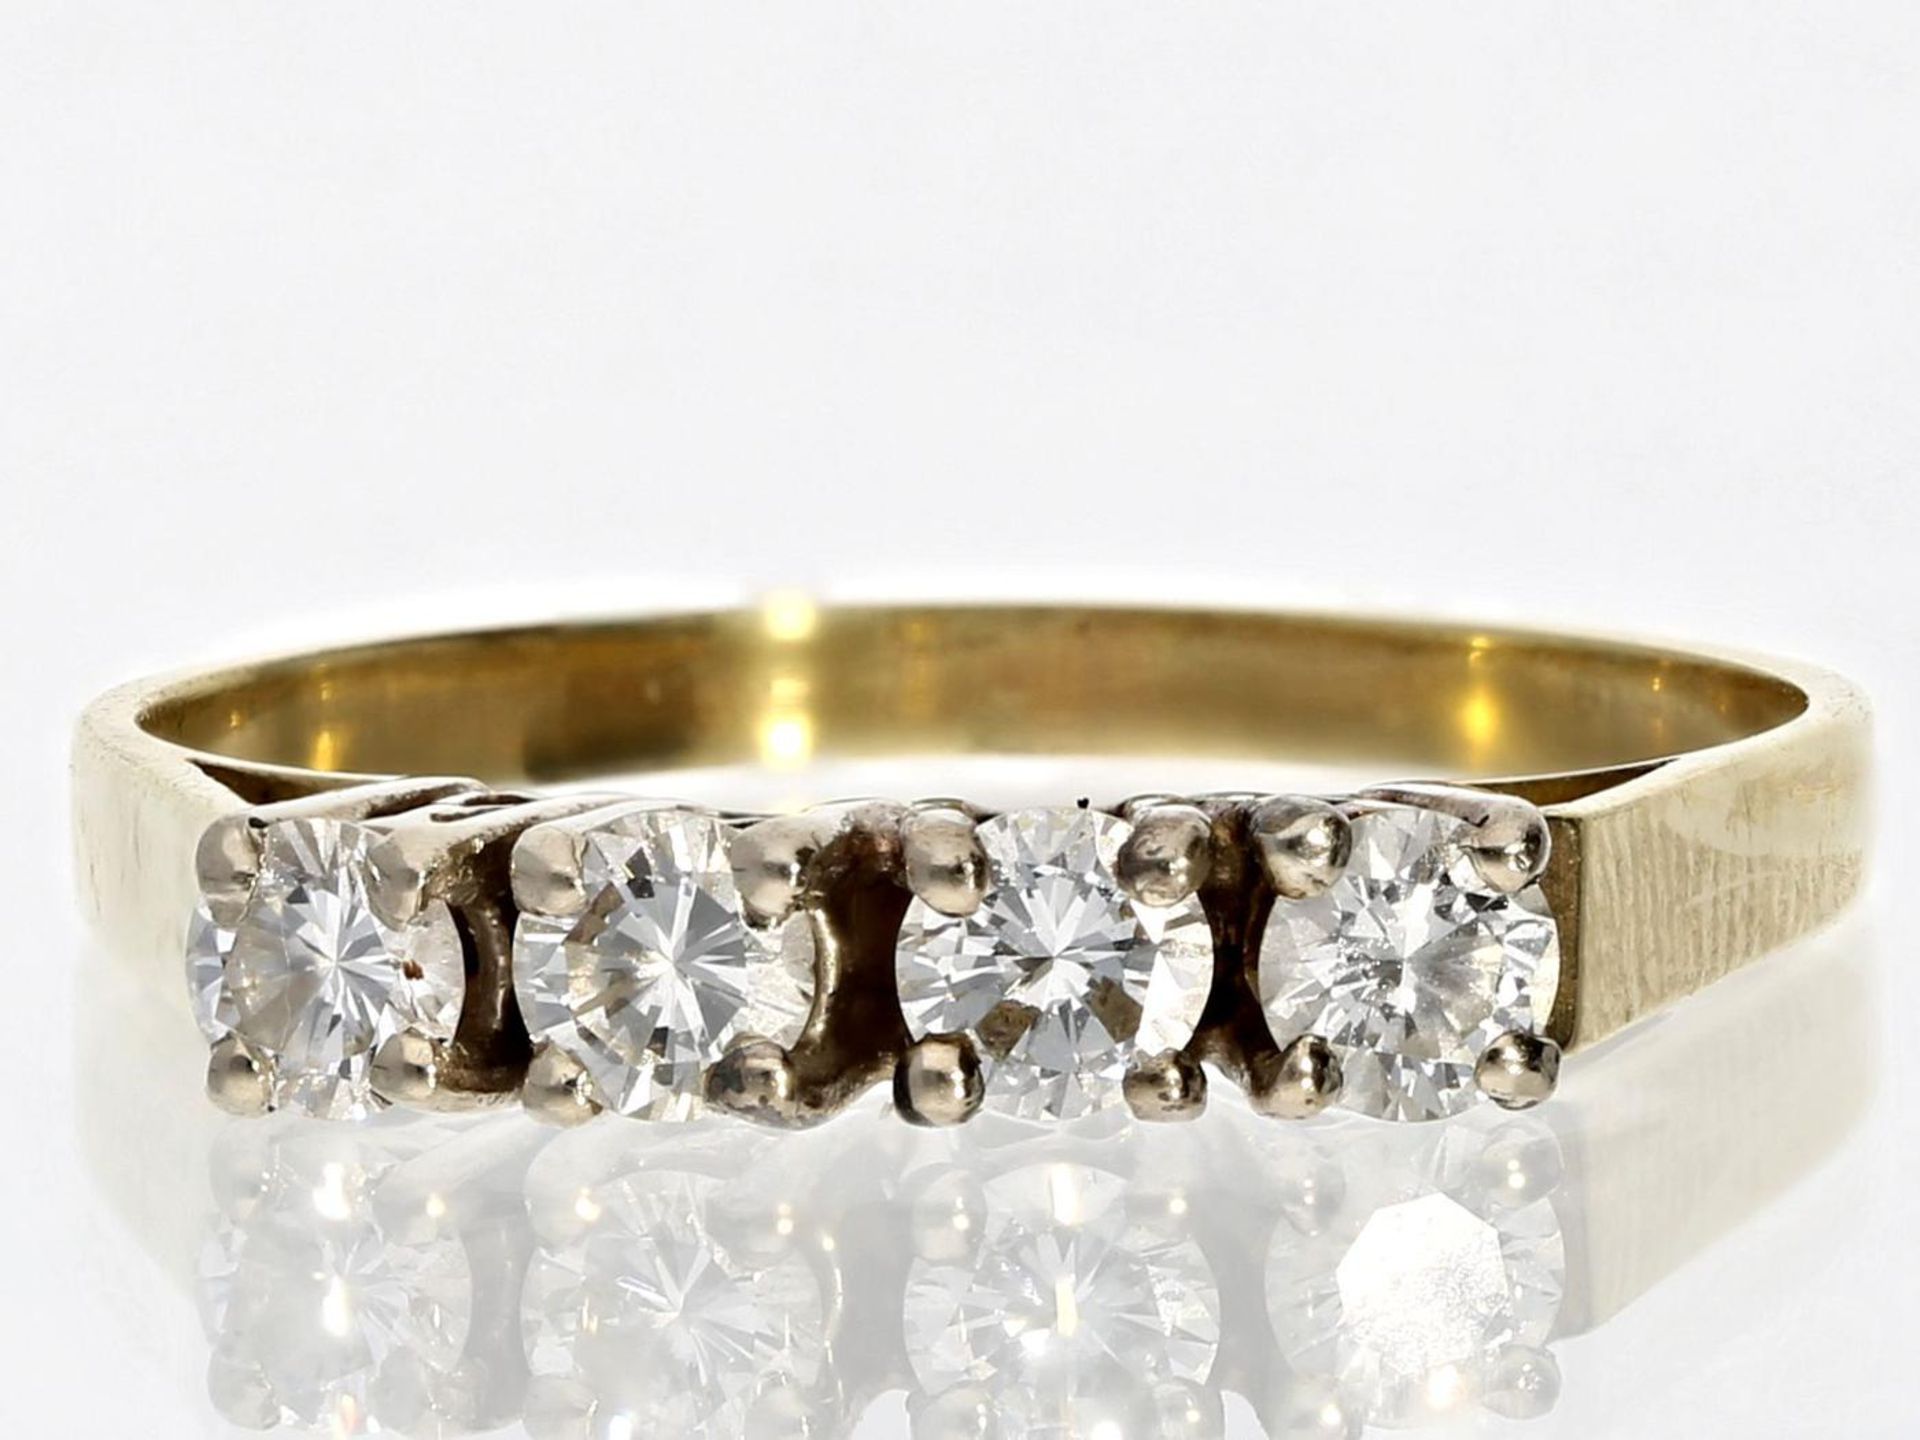 Ring: alter Goldschmiedering mit Brillanten, ca. 0,5ct Ca. Ø18mm, RG57, ca. 2,3g, 14K Gold,